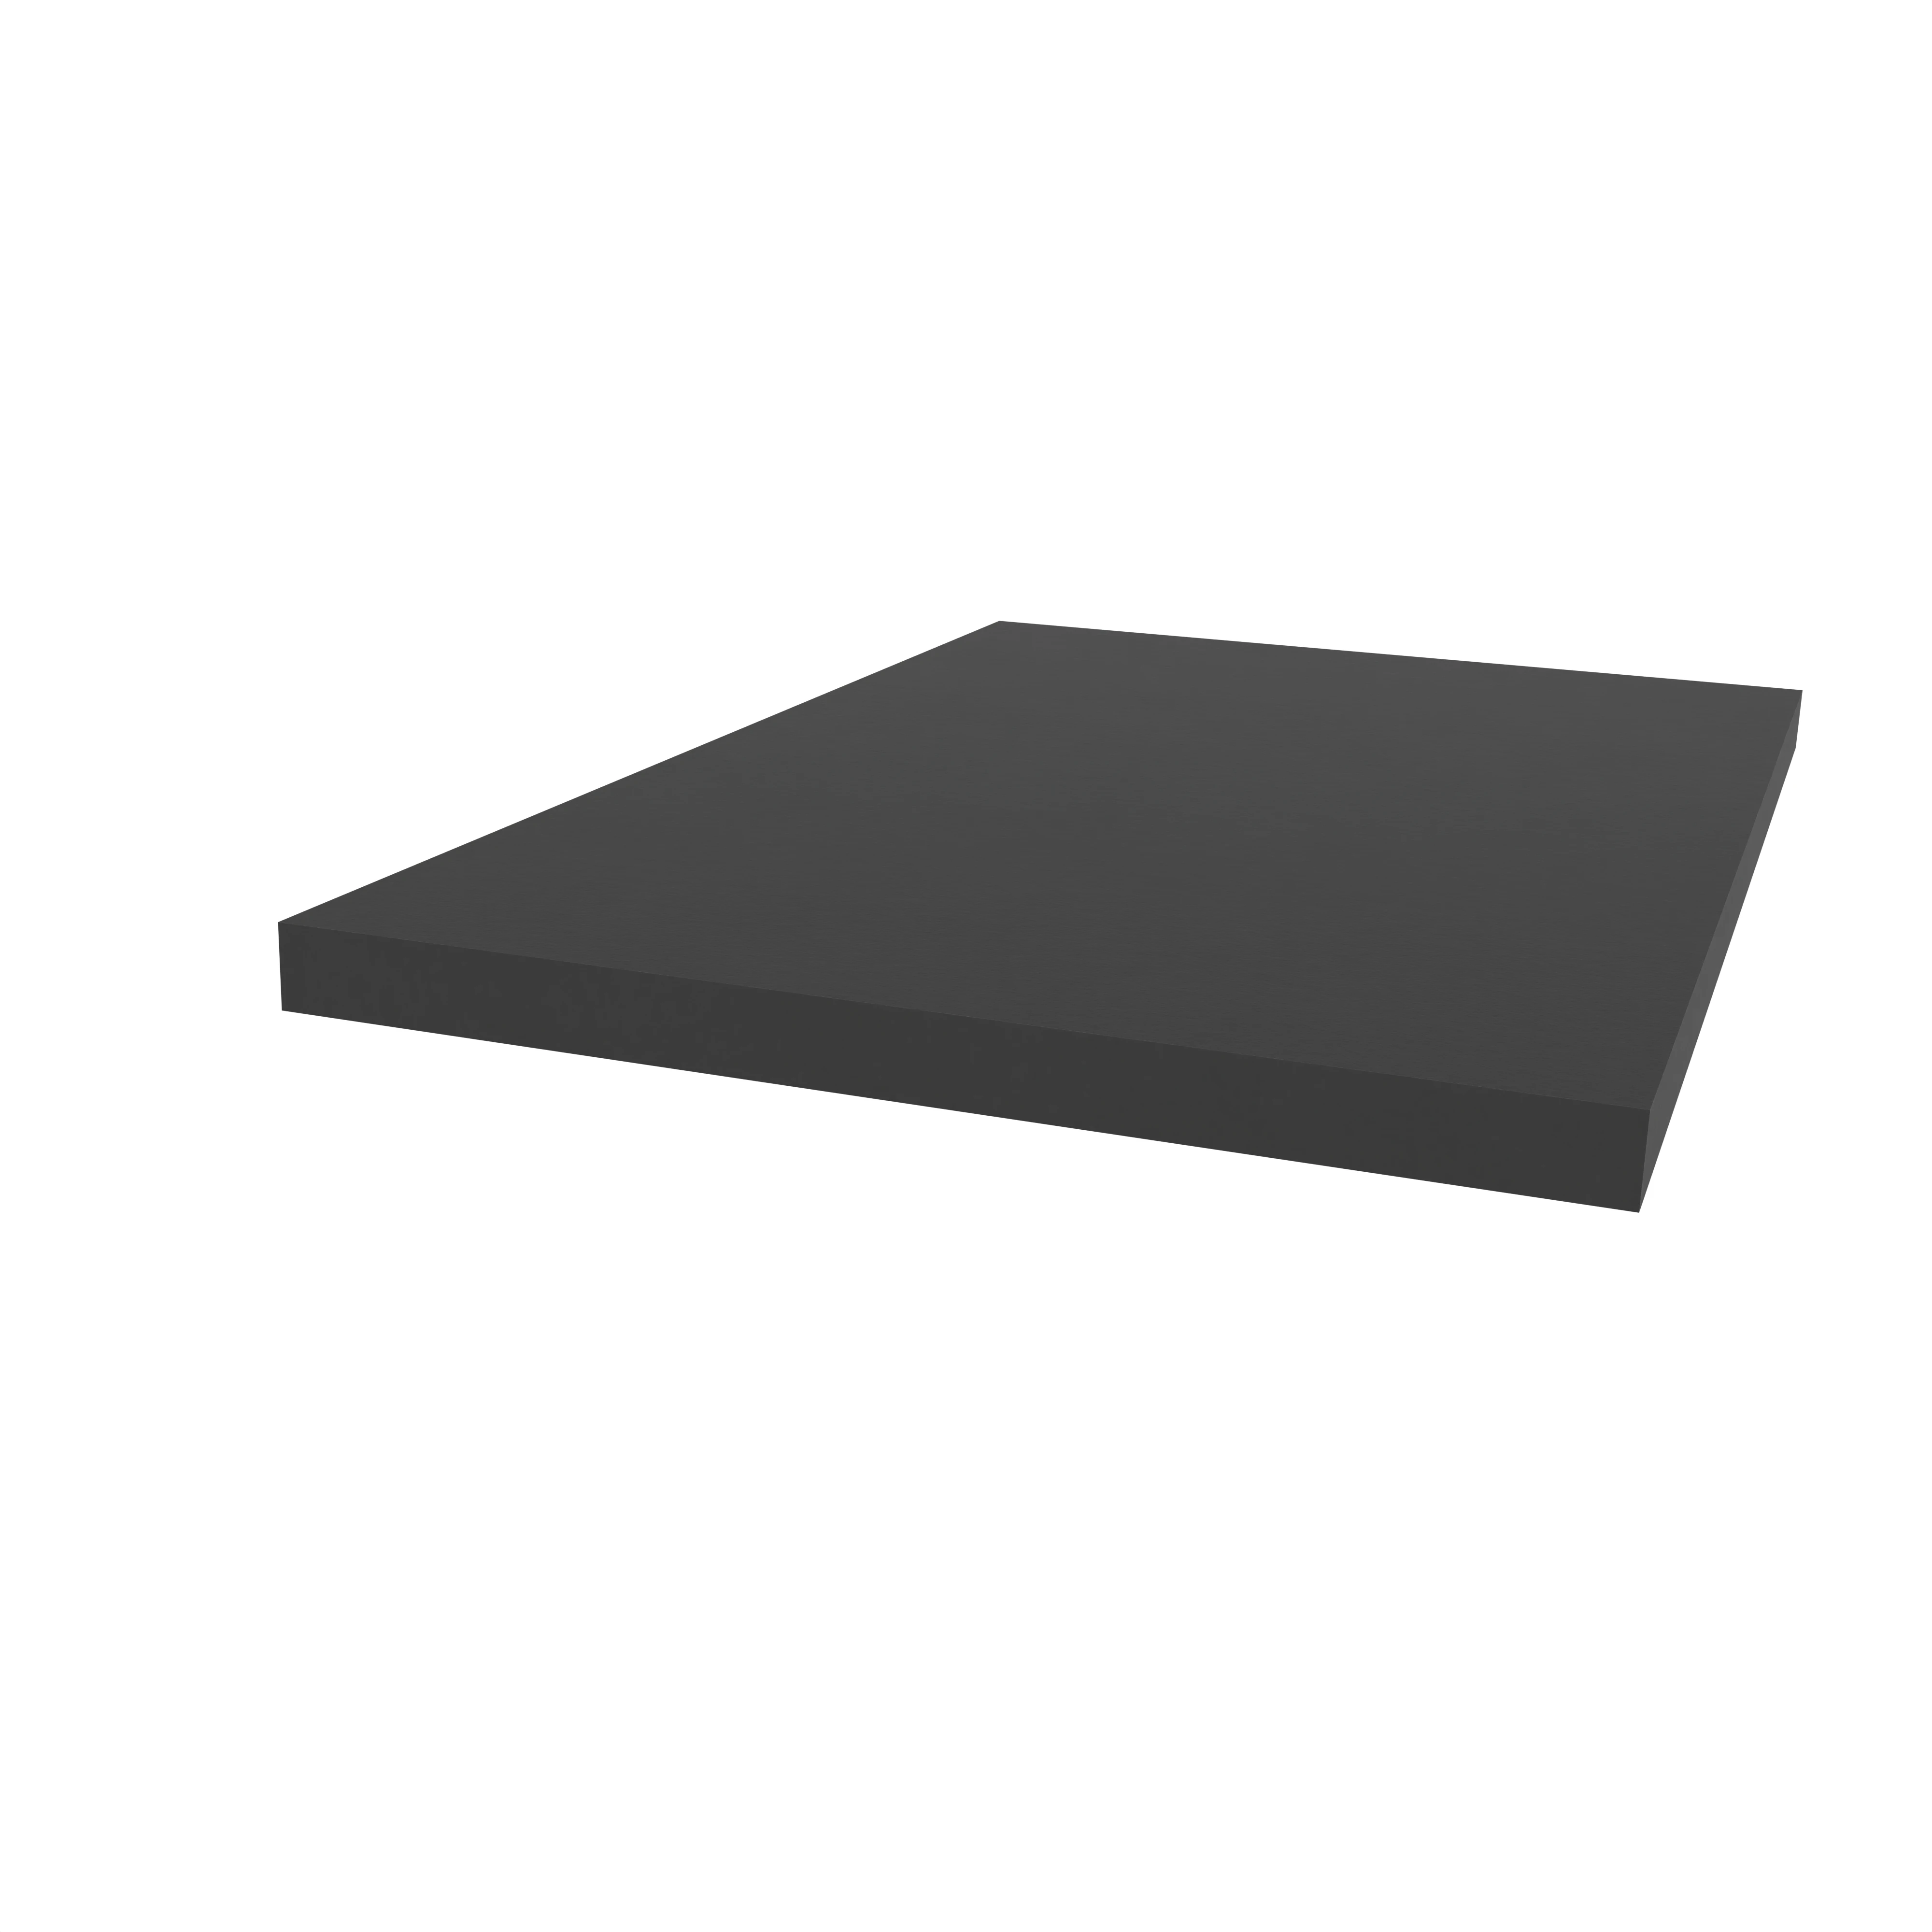 Moosgummidichtung vierkant | 2 mm Höhe | Farbe: schwarz